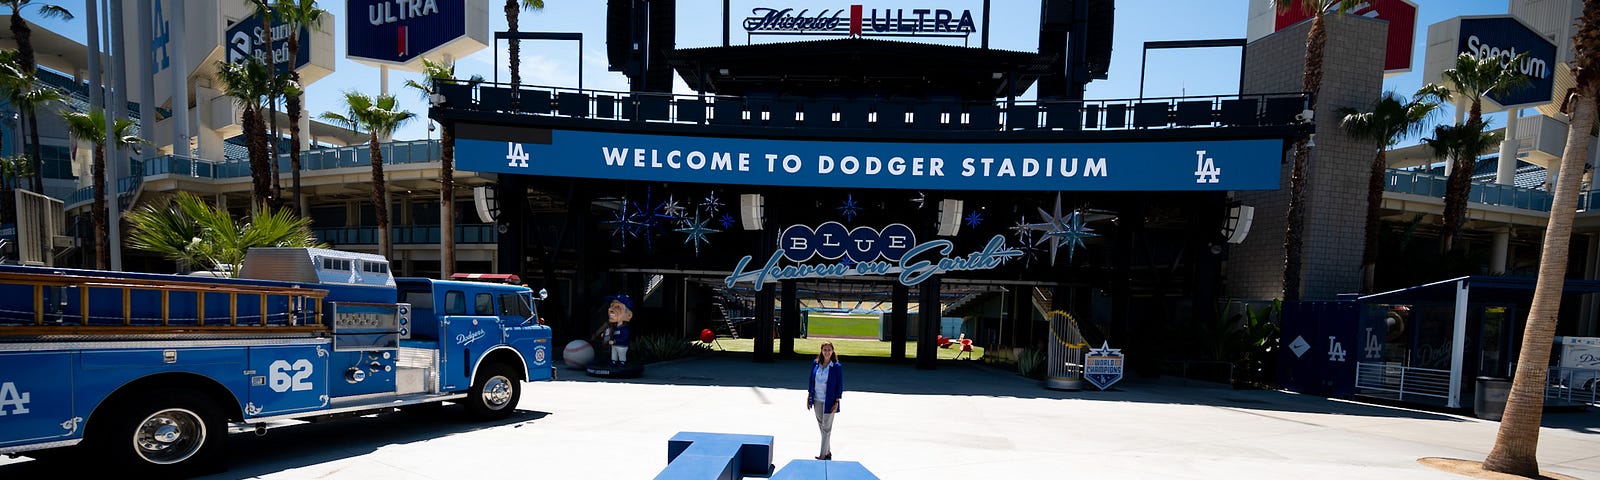 Dodgers showcase new center field plaza, pavilion renovations